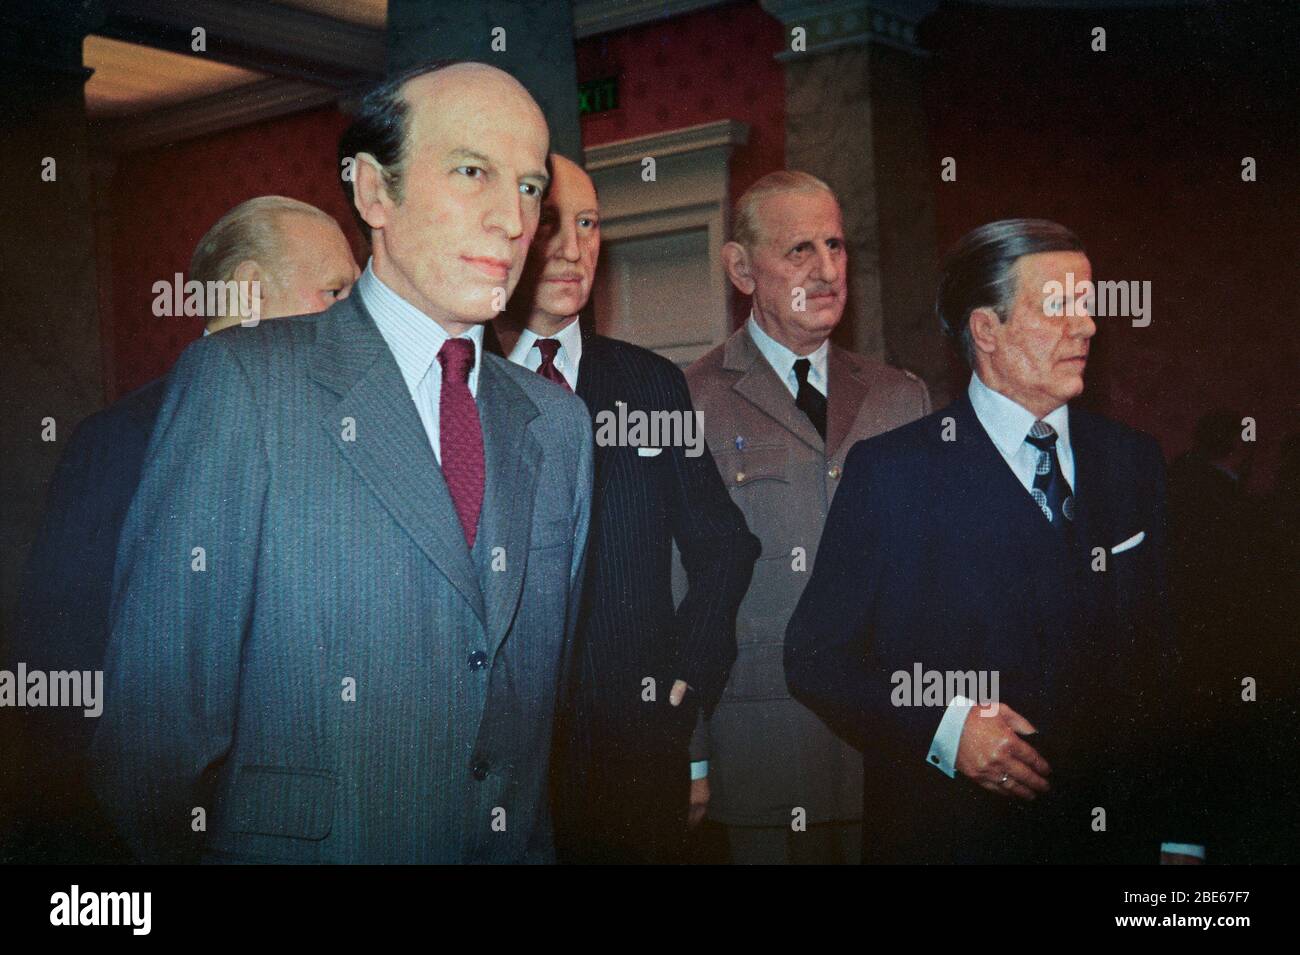 Wachsfiguren europäischer Staatsmänner (Valéry Giscard d´Estaing vorne links, Helmut Schmidt rechts), April 1979, Madame Tussauds, London, England, Großbritannien Stockfoto